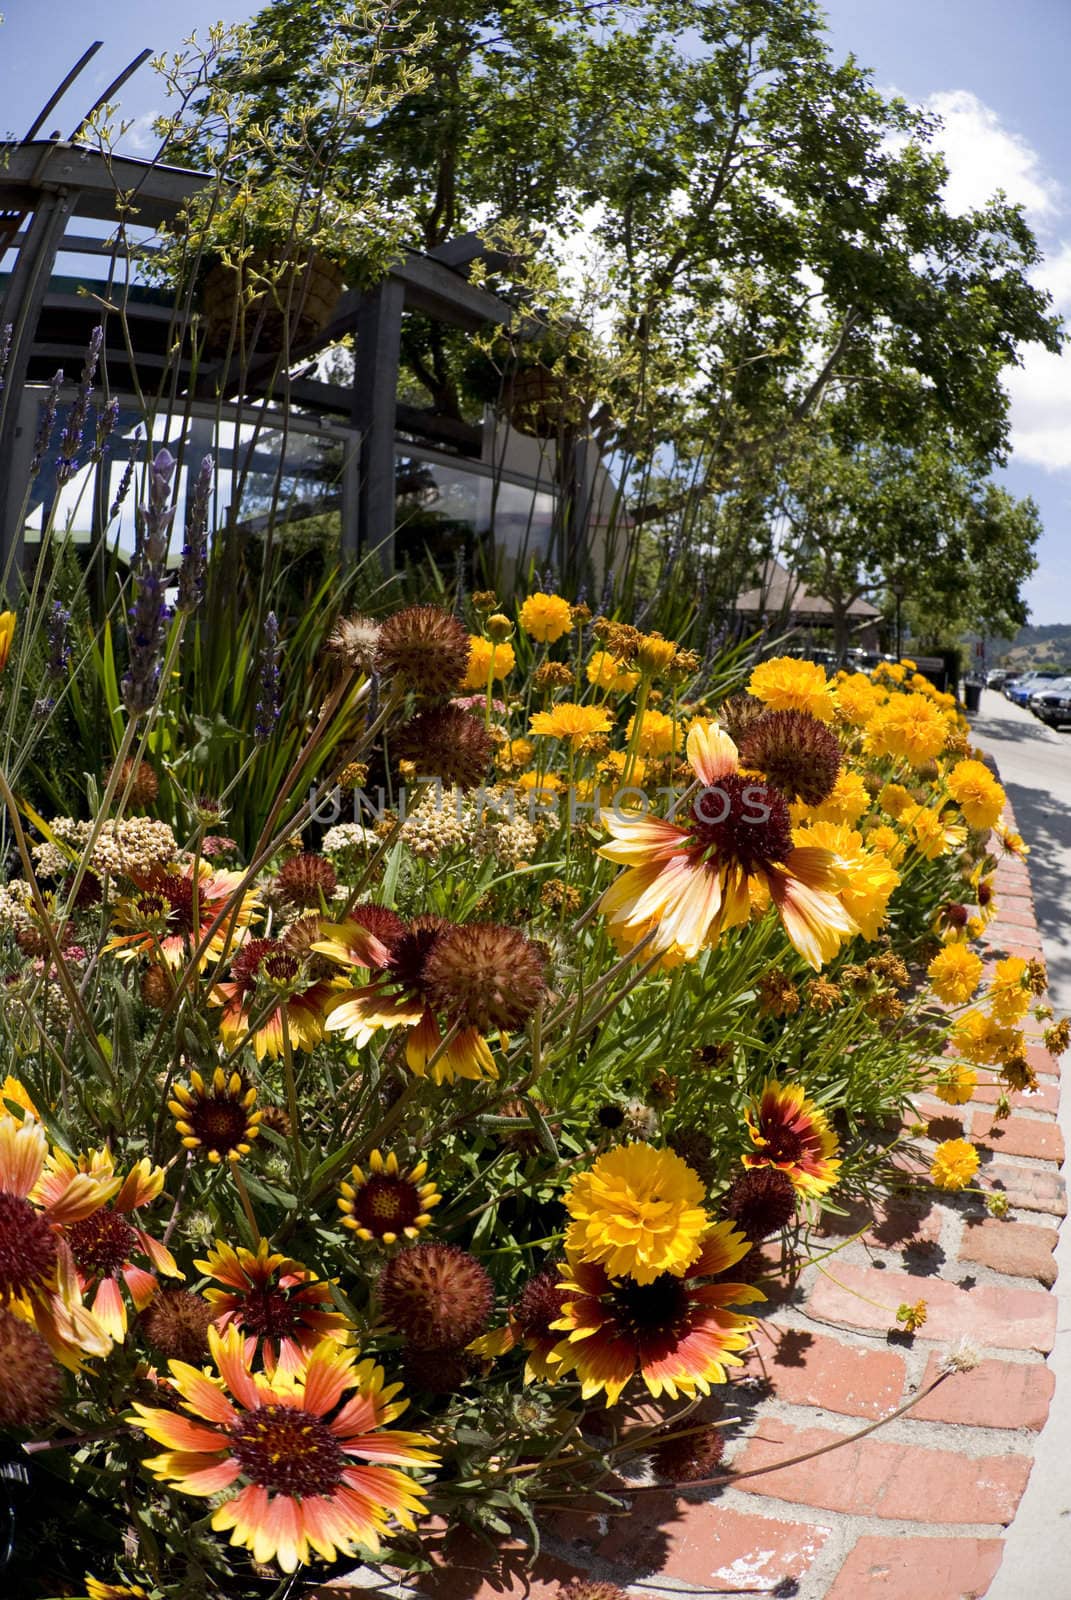 California Sunflowers on a sidewalk